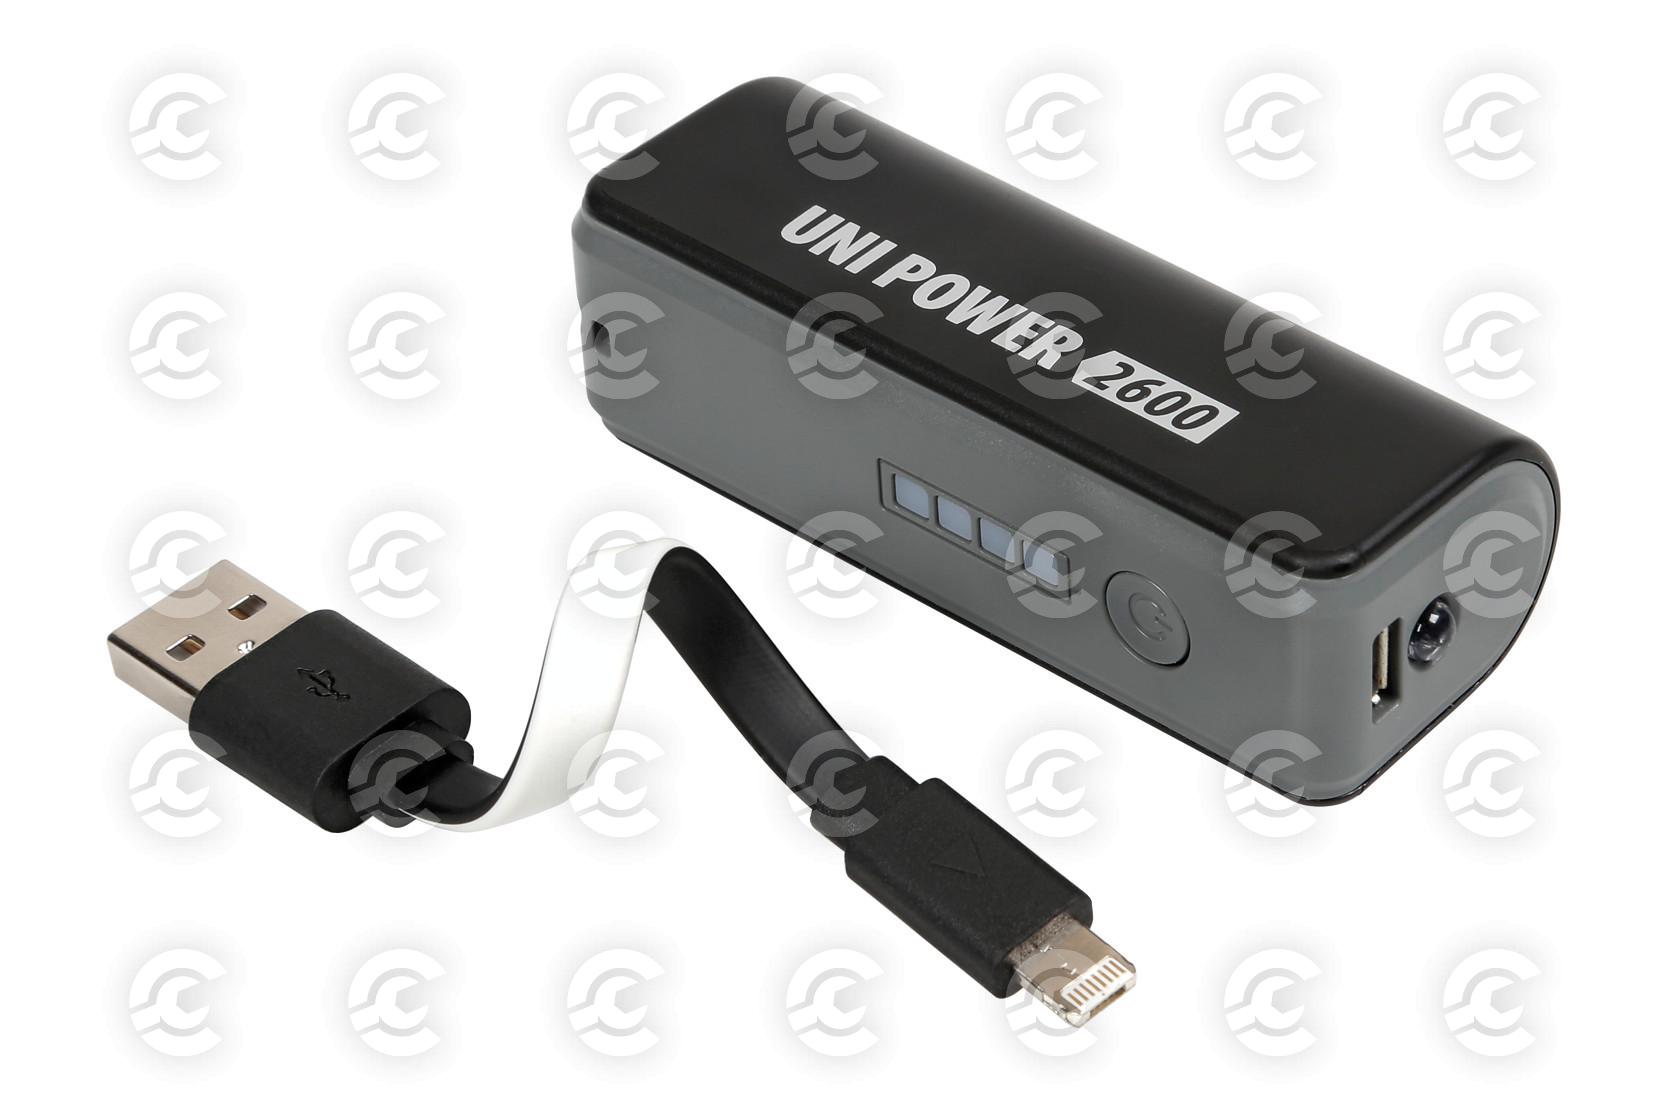 Uni-Power 2600 power-pack con cavo universal Apple / Micro Usb